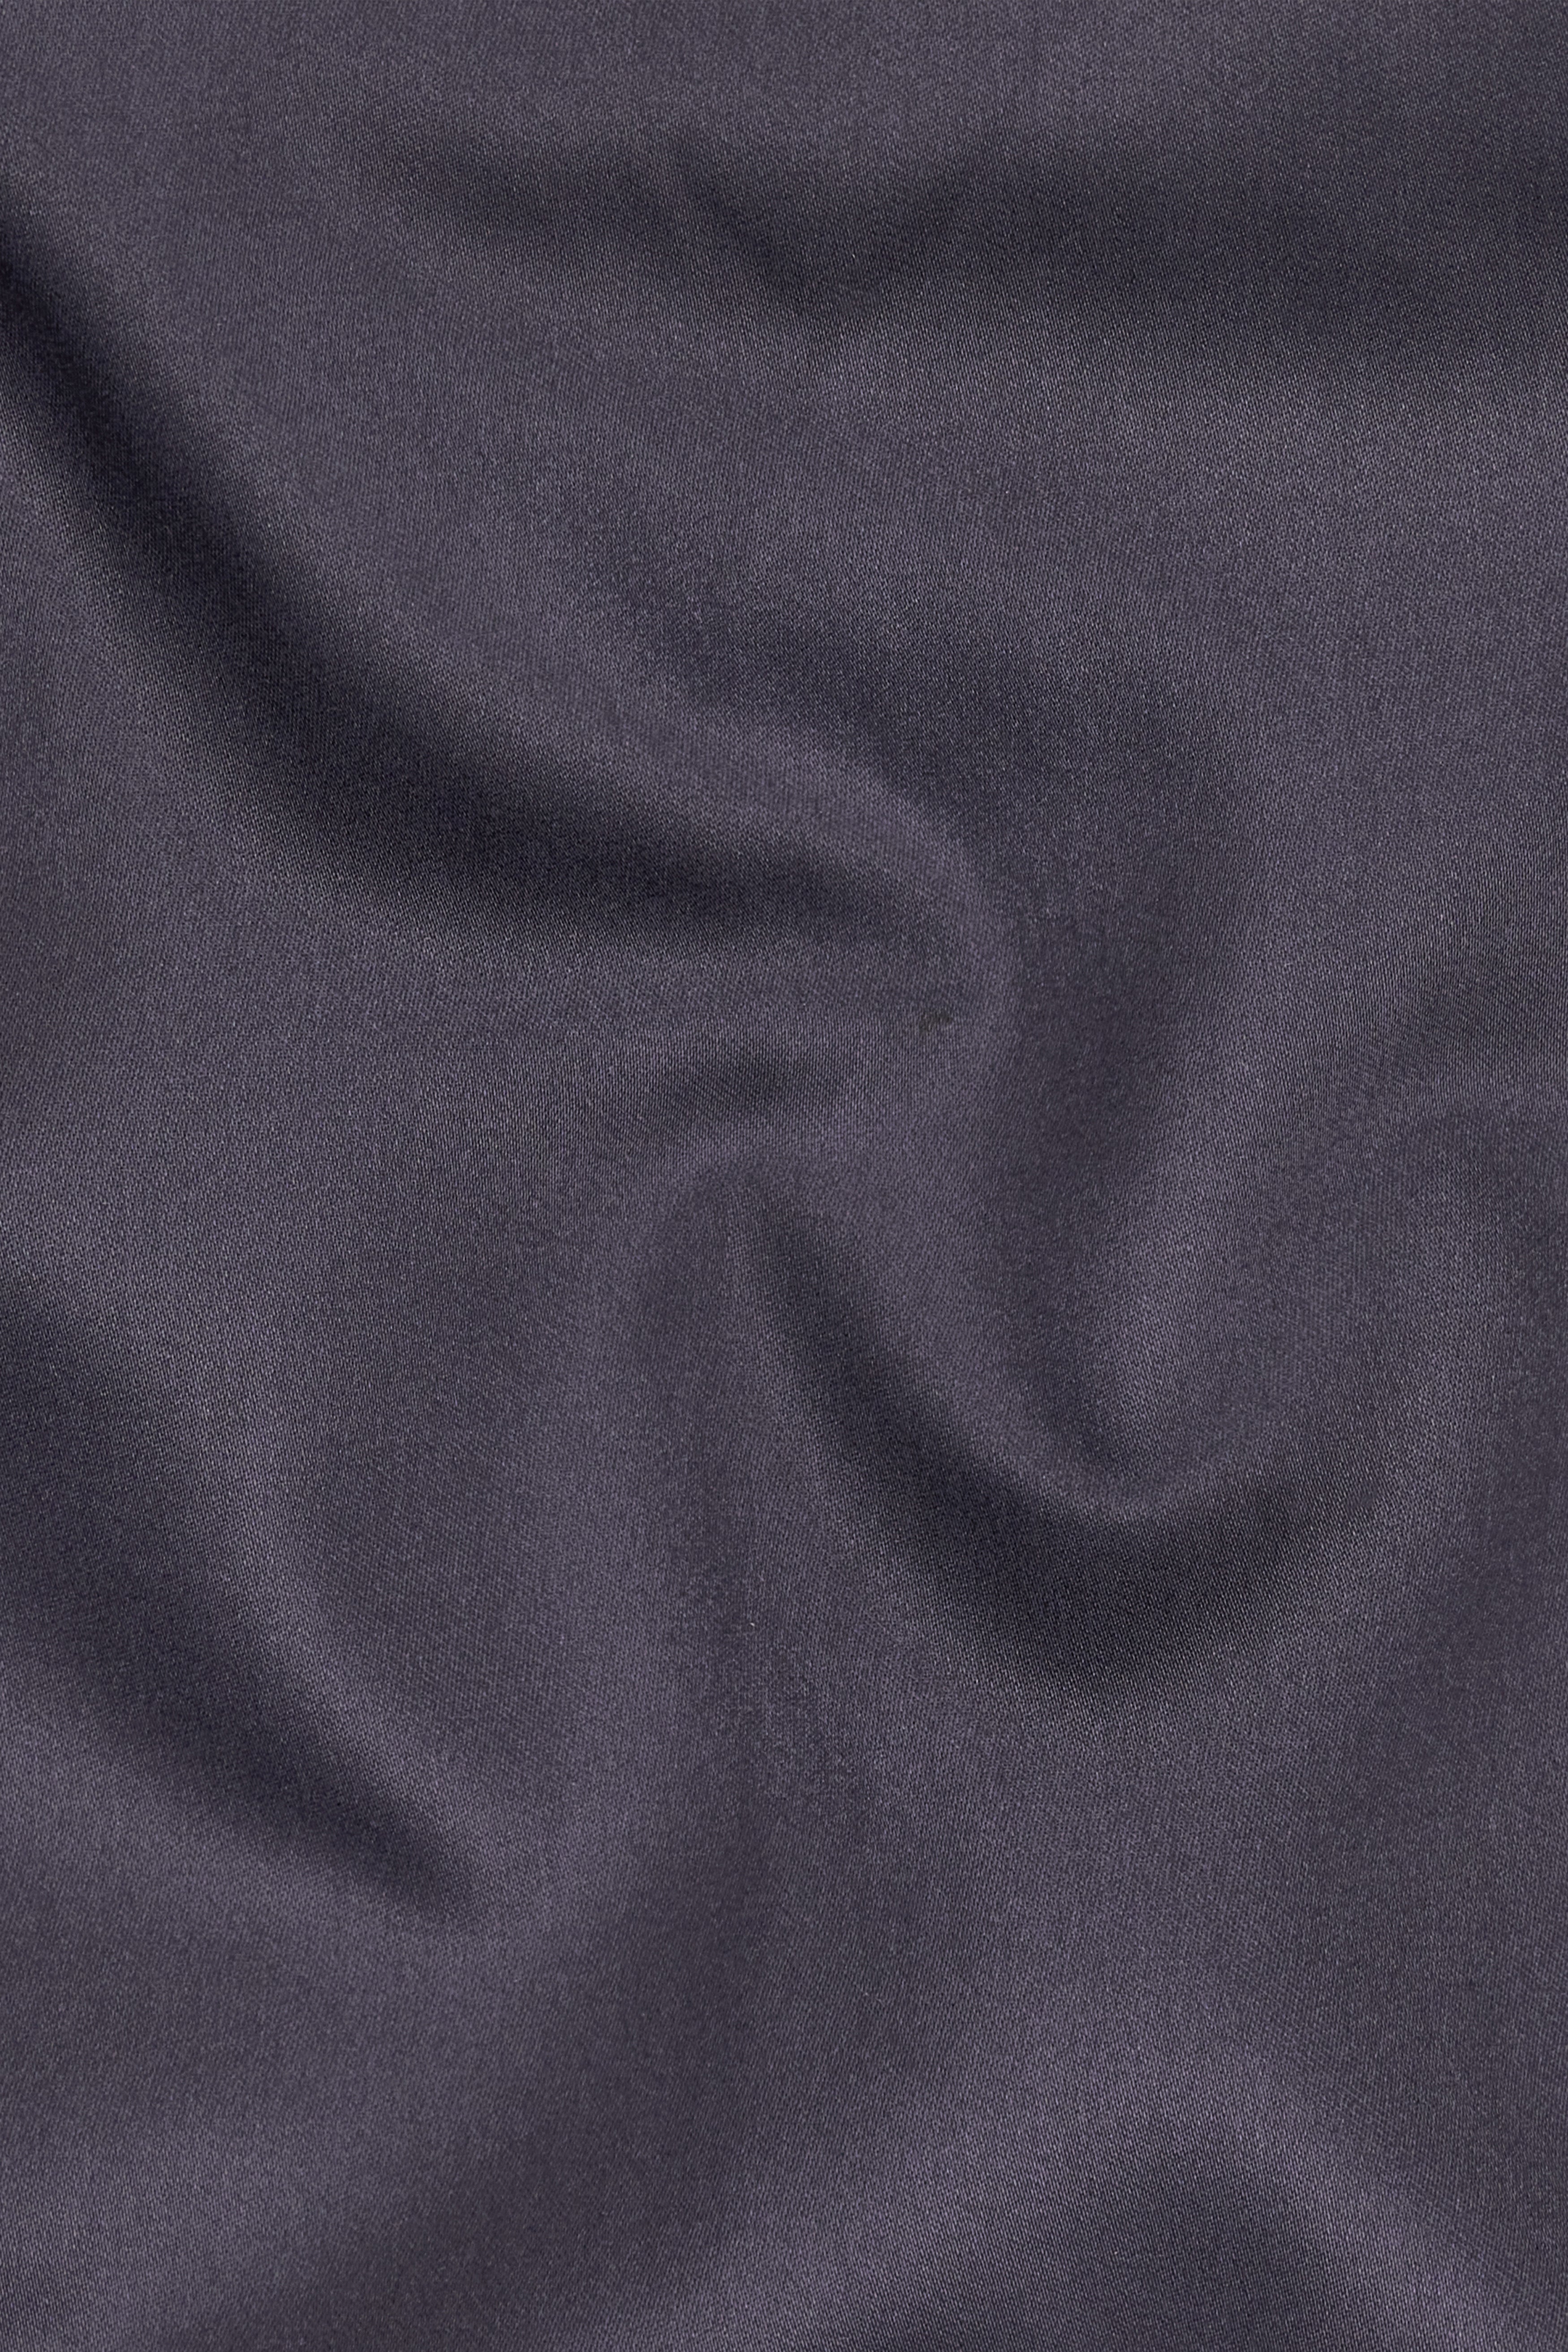 Porpoise Grey Subtle Sheen Wool Blend  Waistcoat